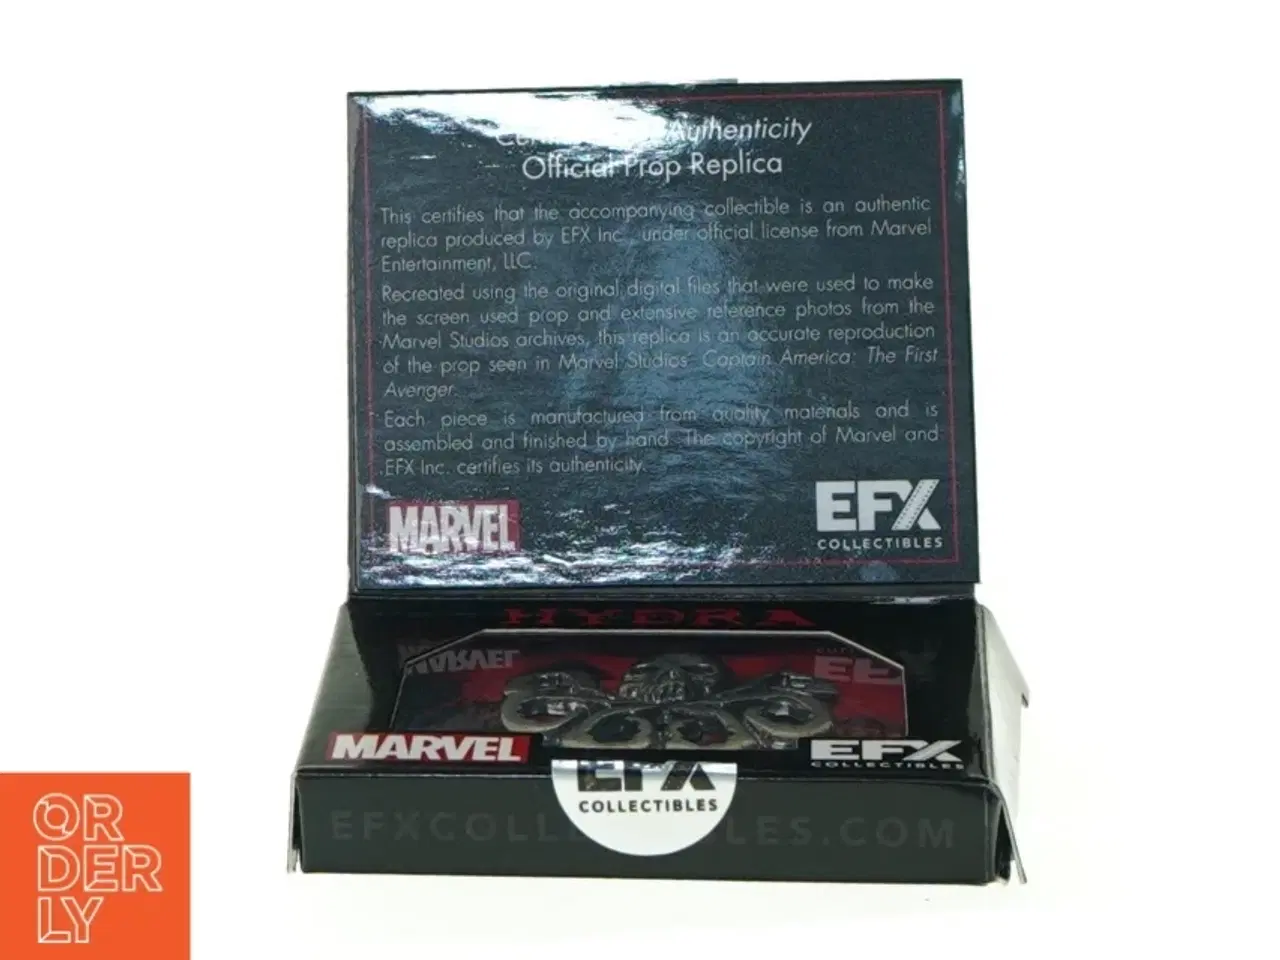 Billede 3 - Captain America Hydra pin - Official prop replica fra Marvel (str. 8 x 6 cm)